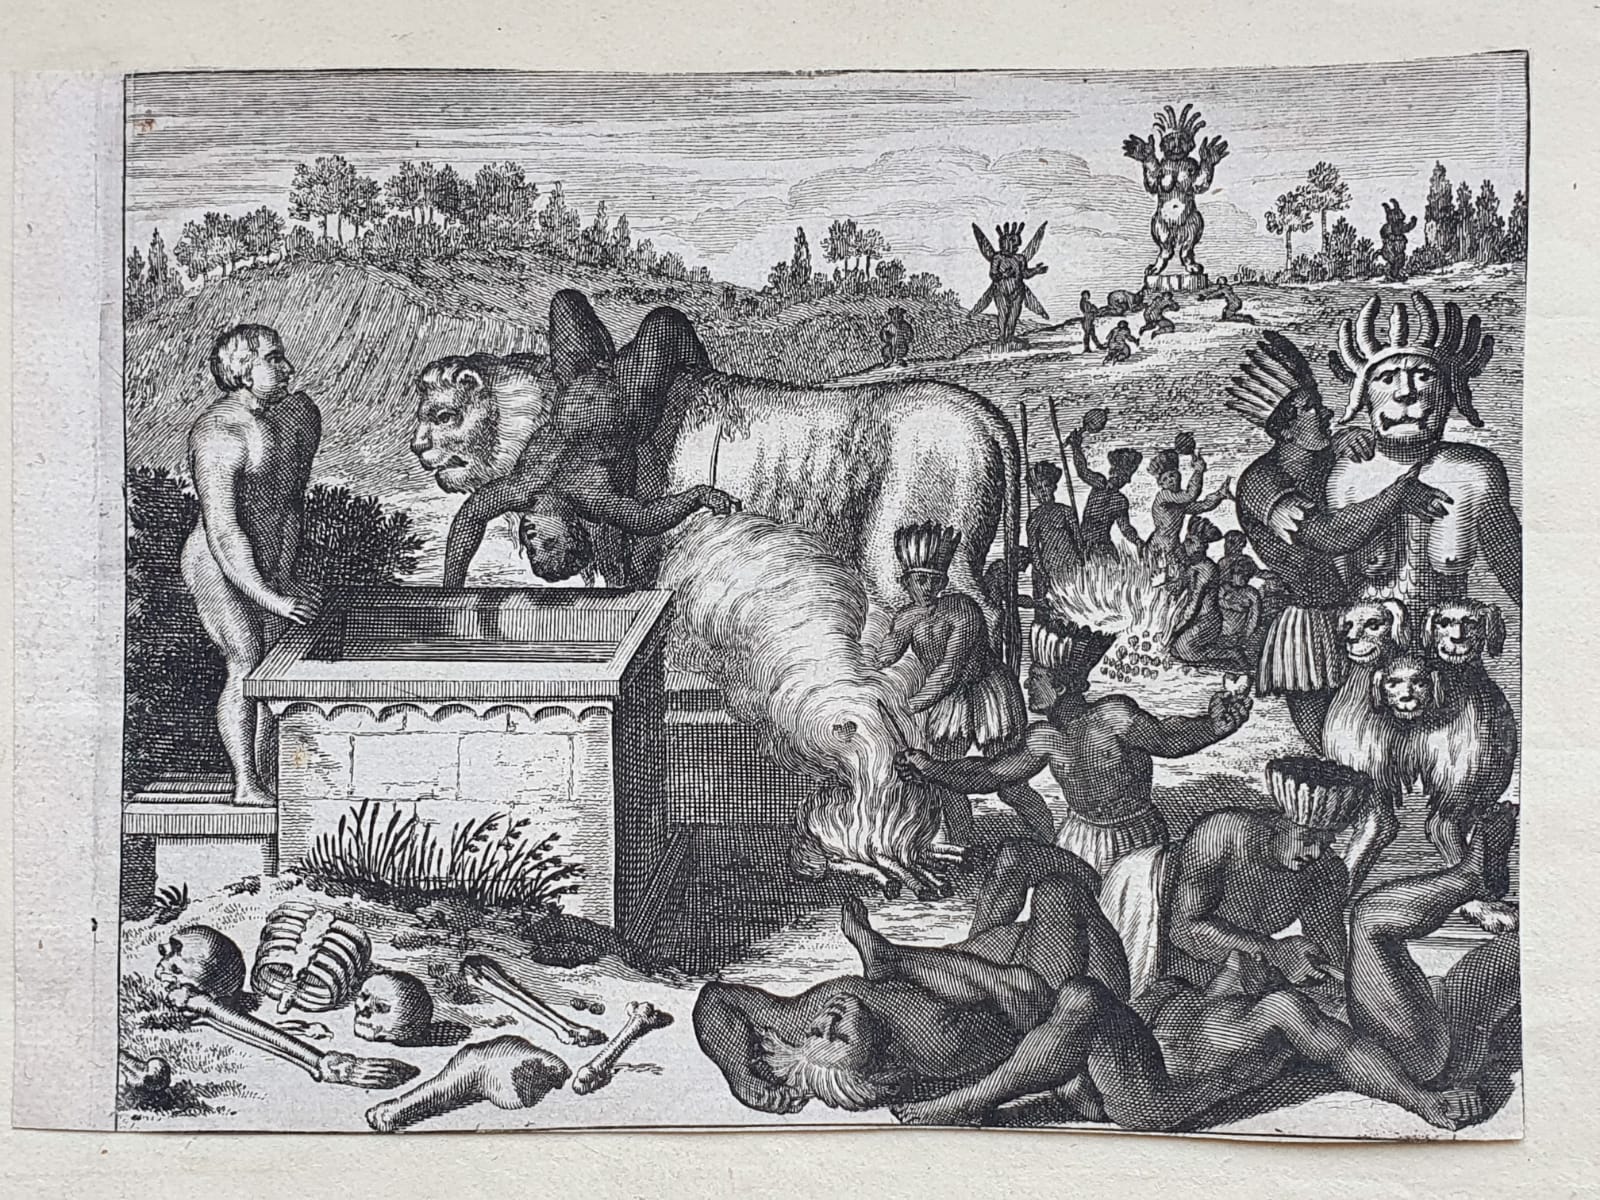 [Original engraving, gravure] J. van Meurs [?] The Island of Sacrifice, published 1670-1671.